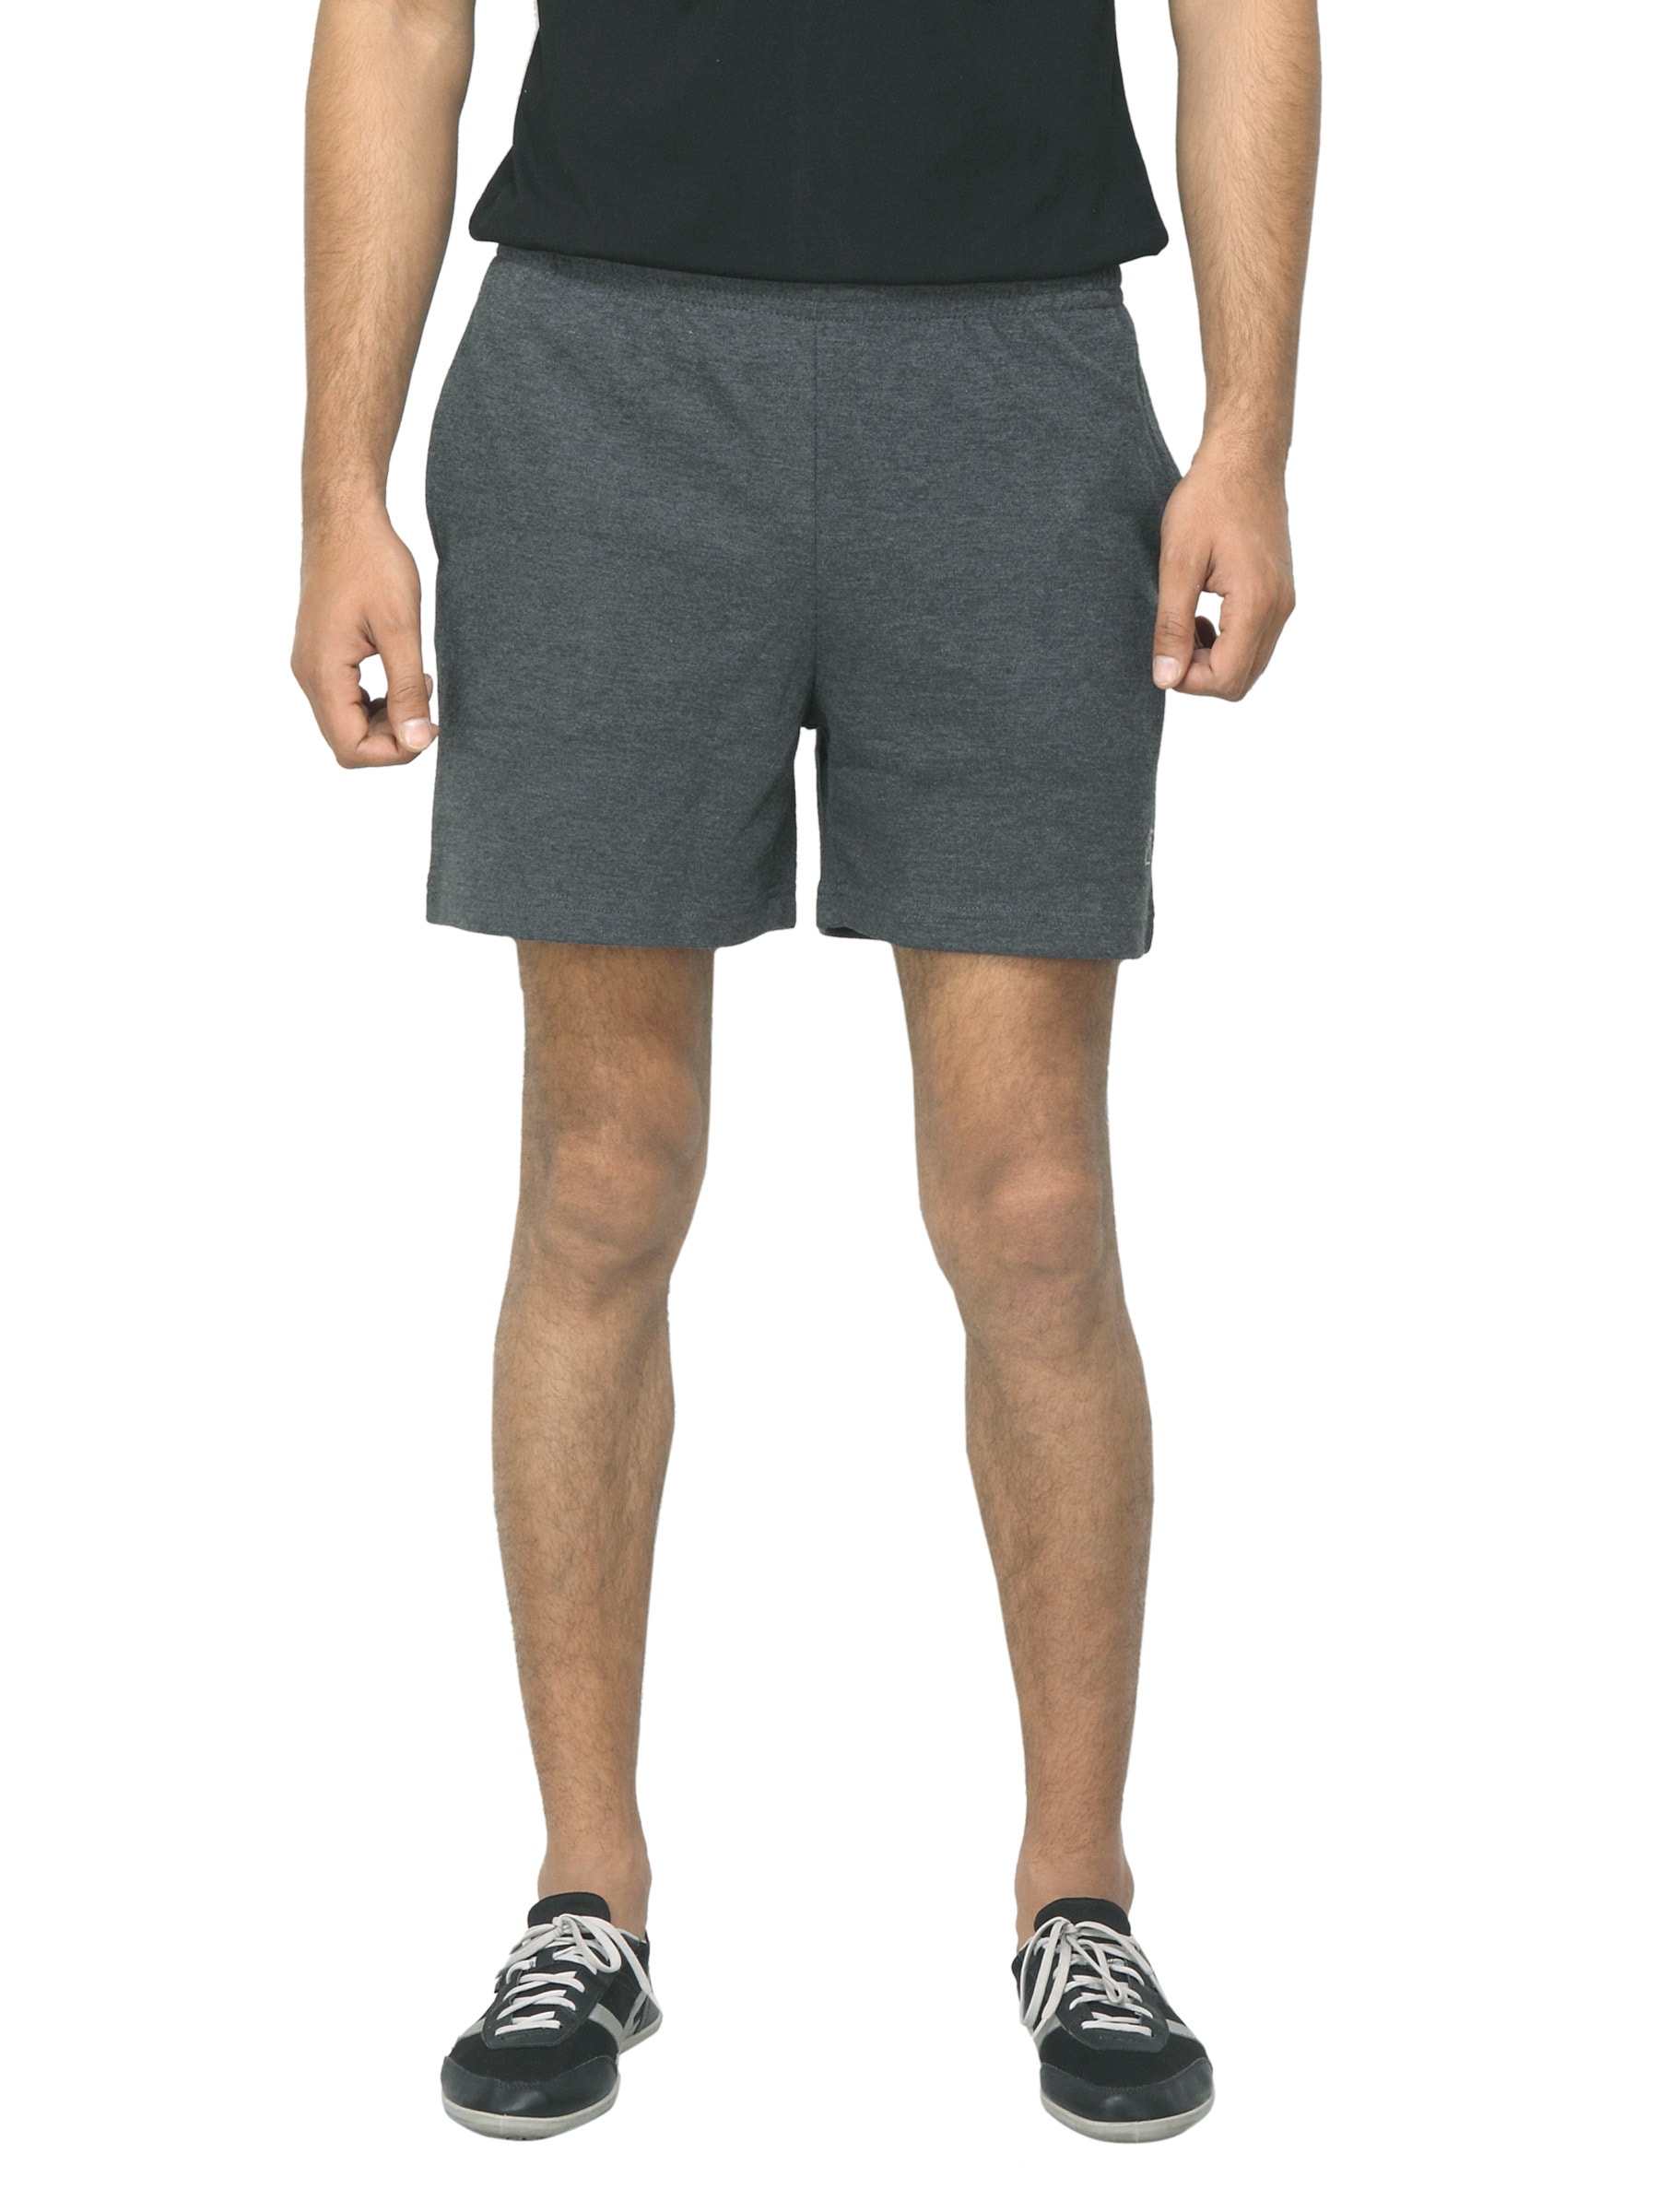 Proline Charcoal Grey Shorts